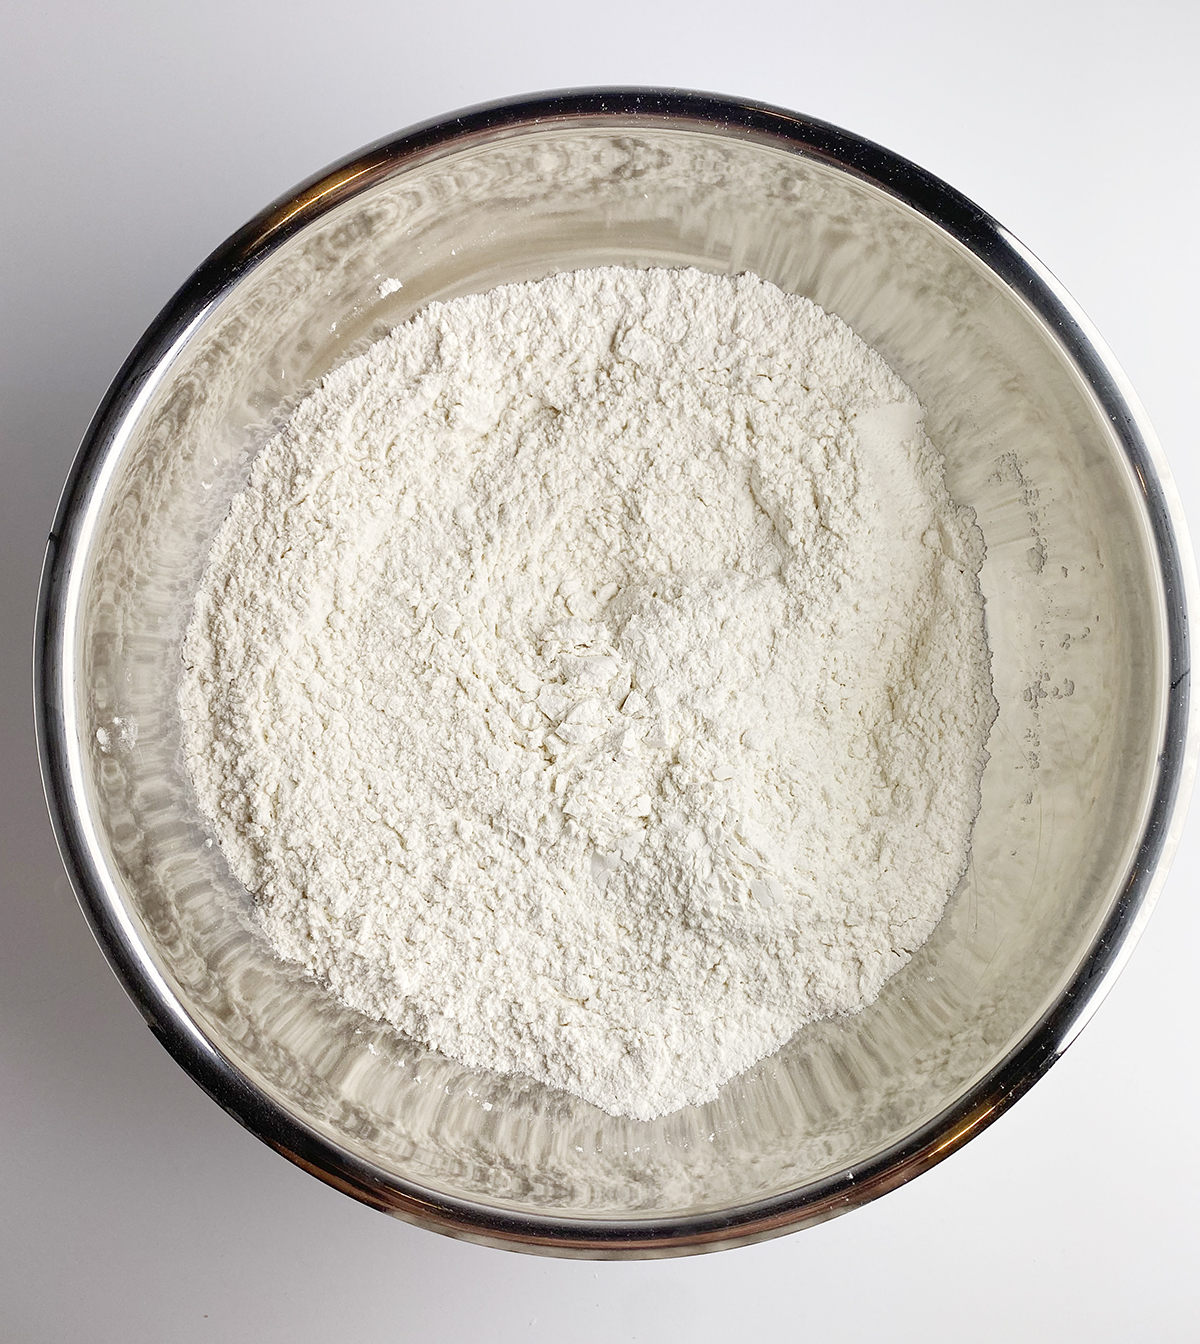 Focaccia flour salt mixture in a metal bowl.